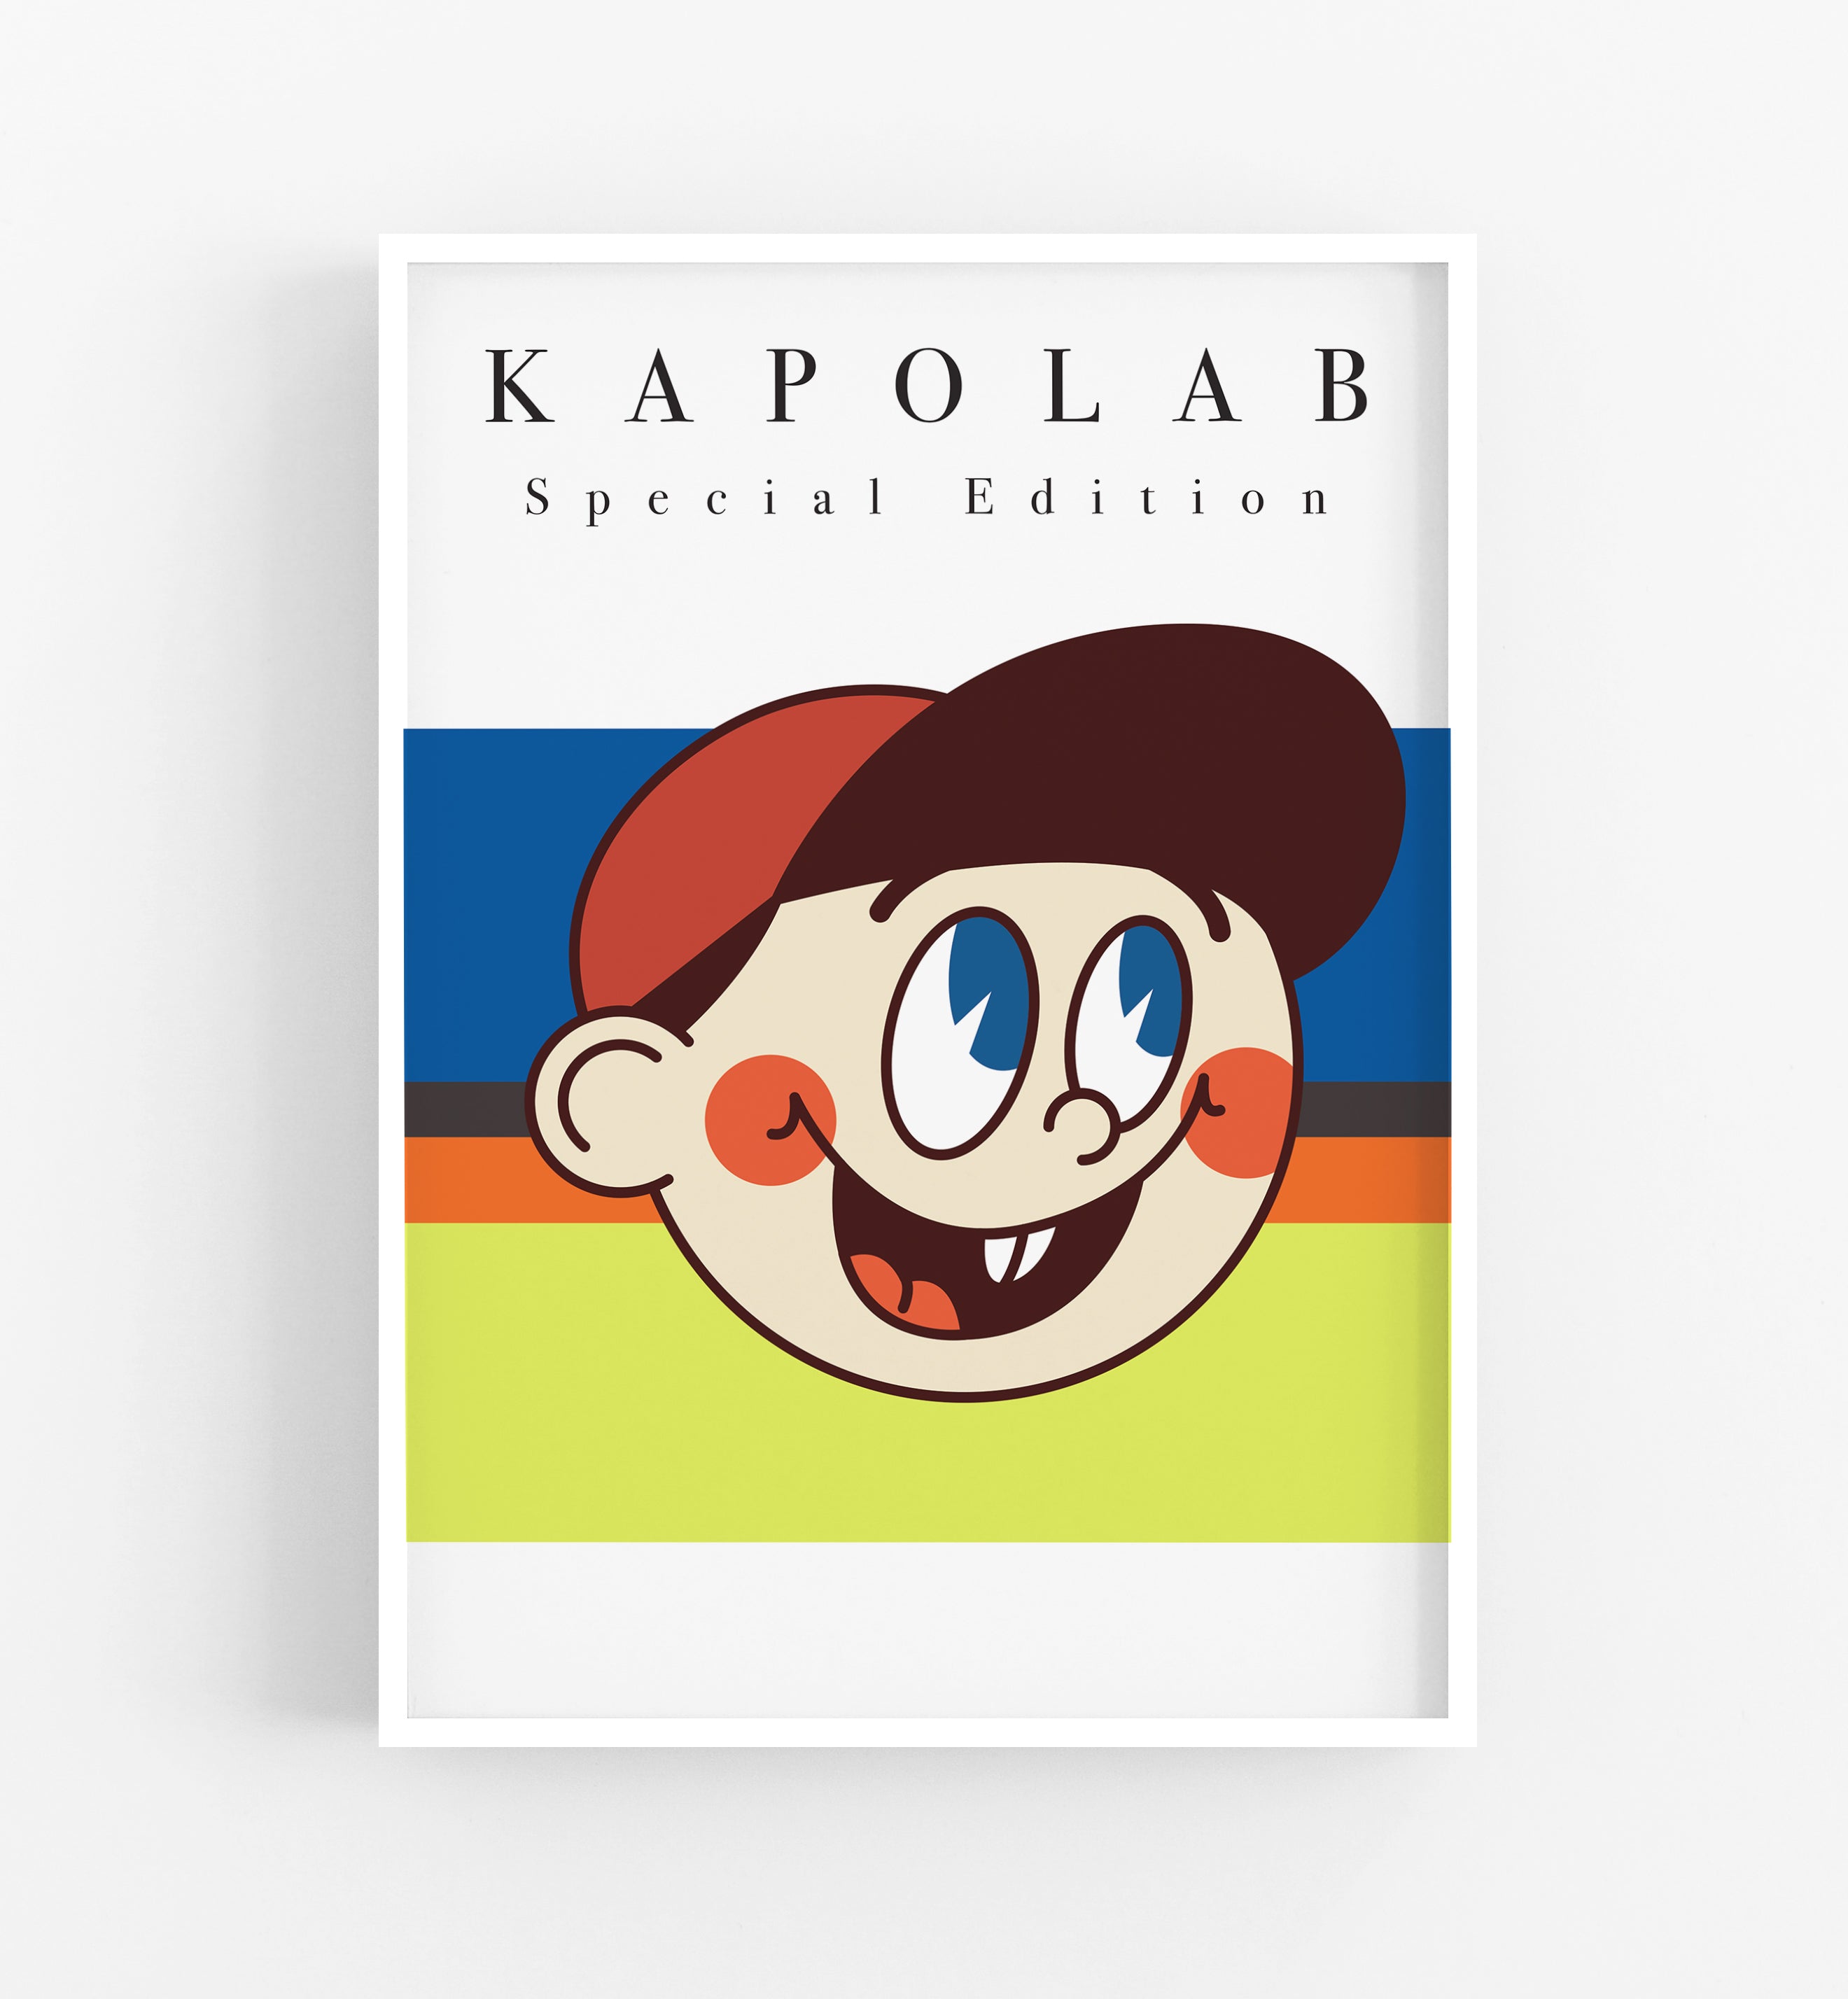 KapoLab Special Edition